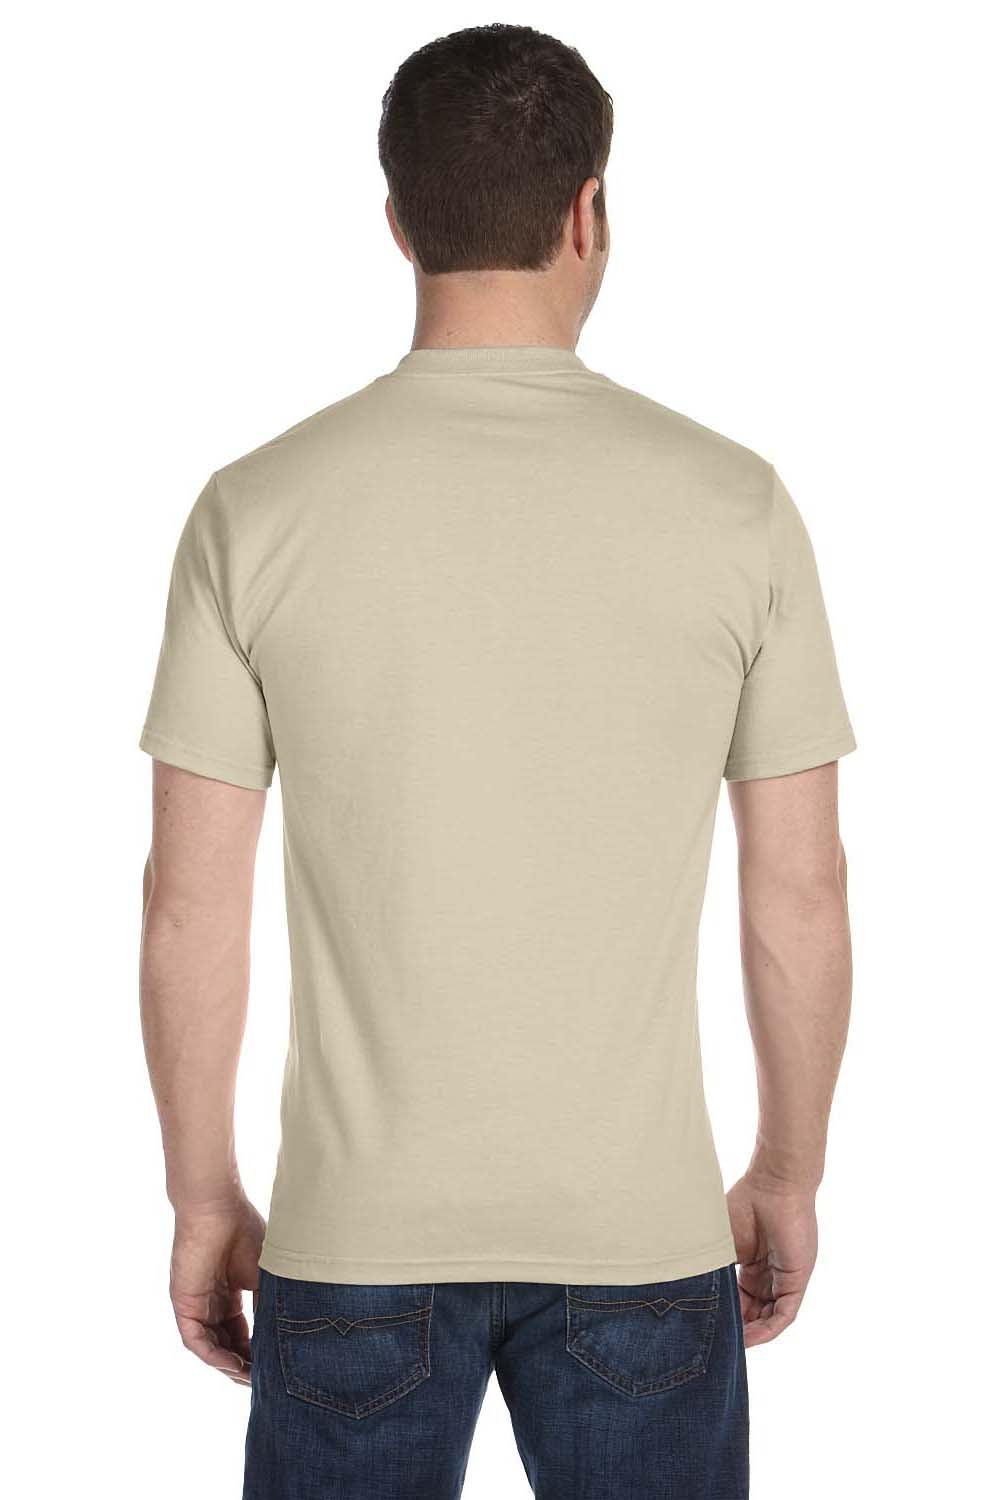 Hanes 5180 Mens Beefy-T Short Sleeve Crewneck T-Shirt Sand Brown Back